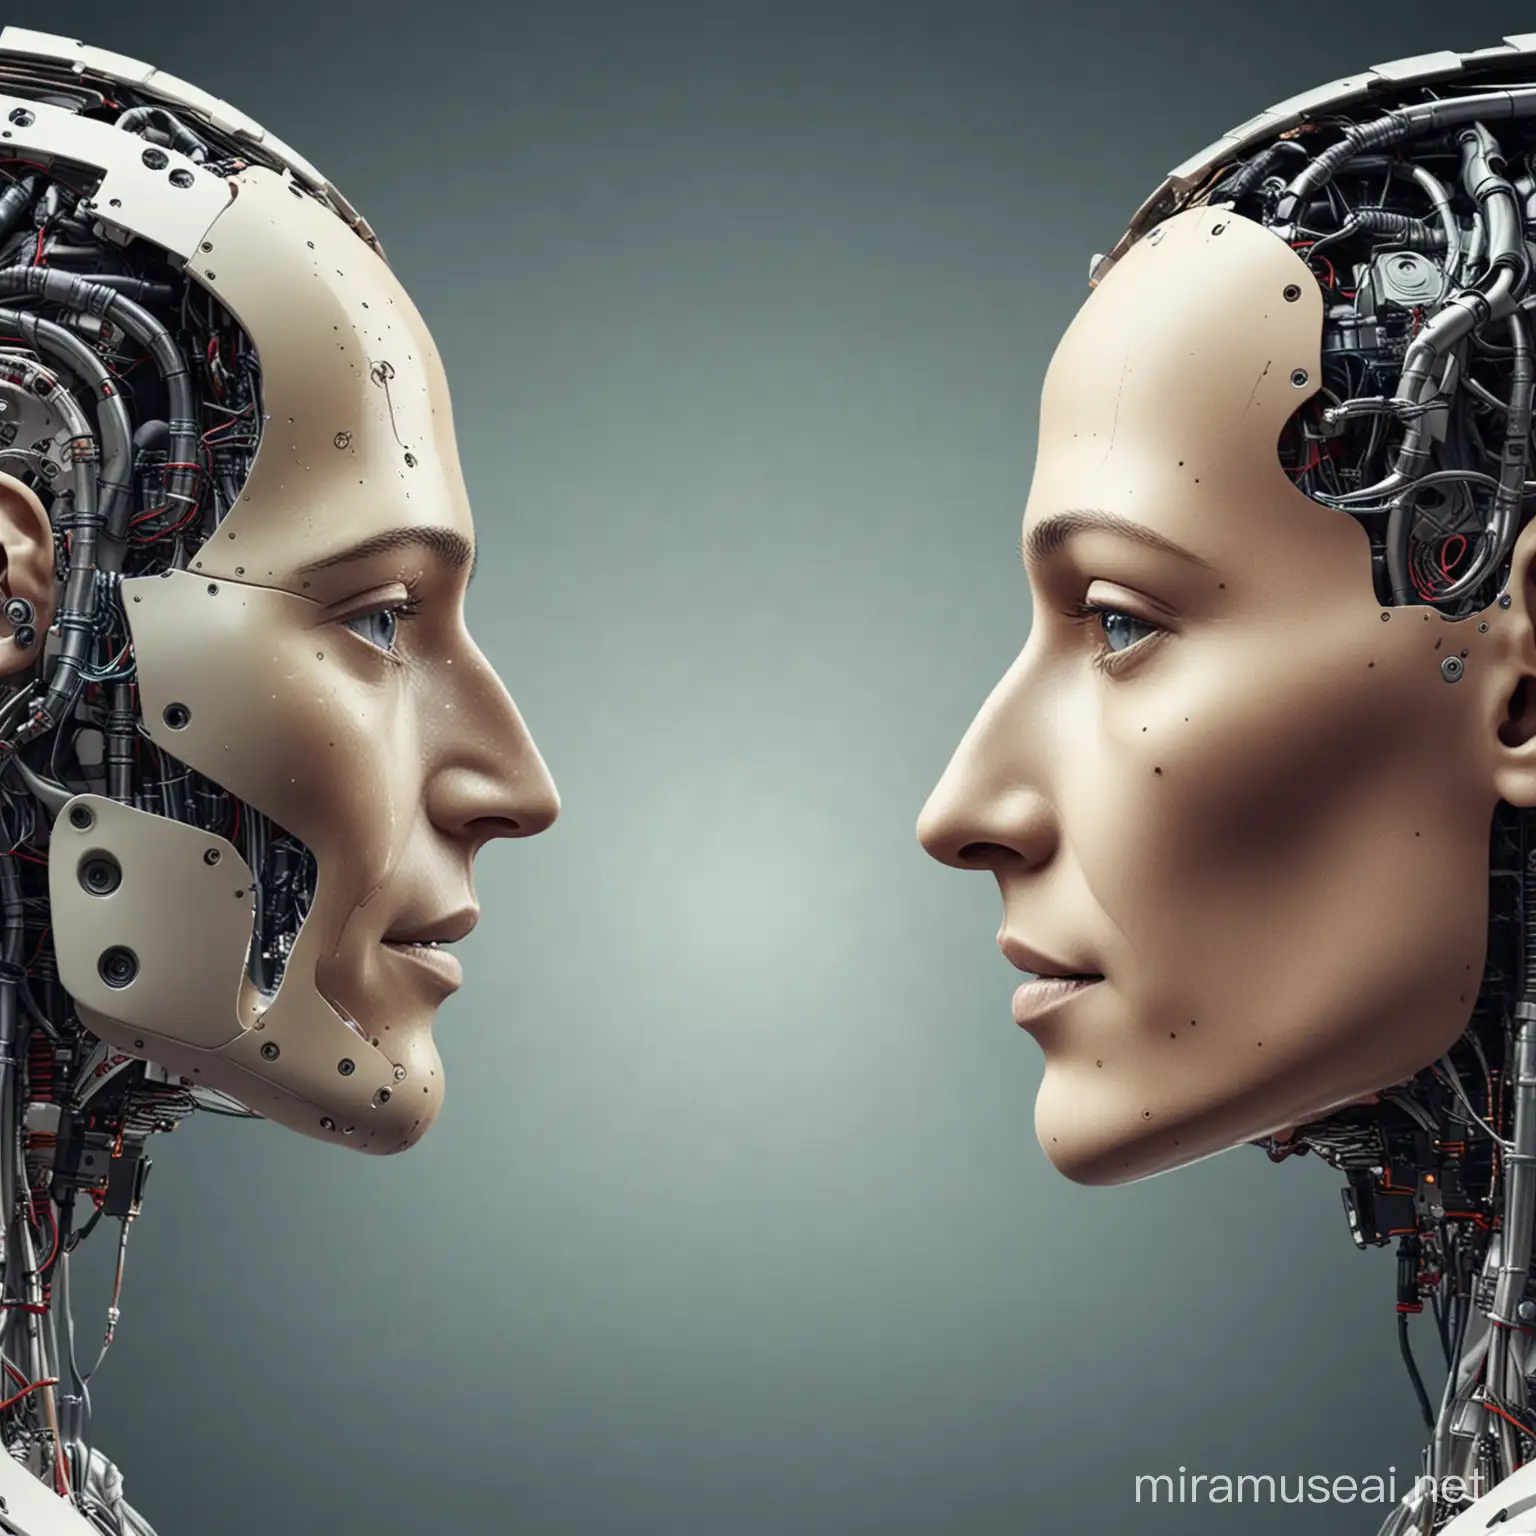 Human versus Artificial Intelligence